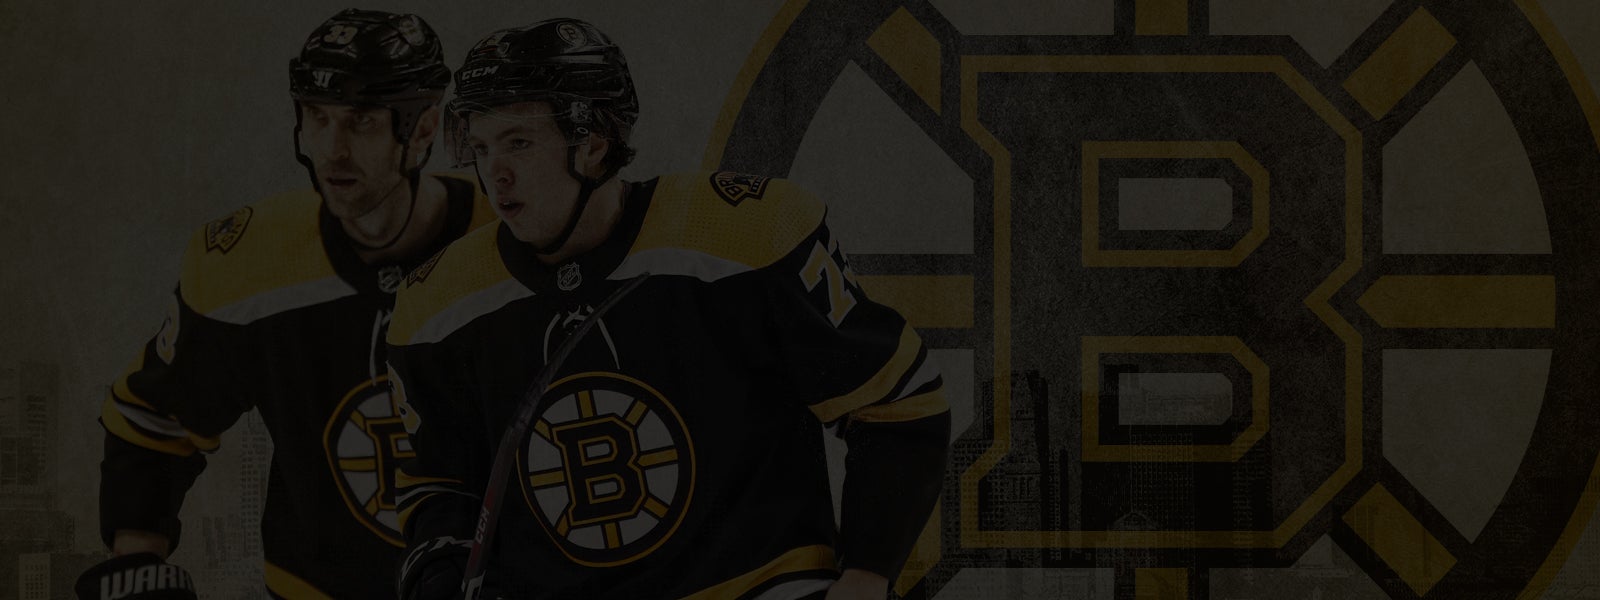  Bruins vs. Panthers  - Canceled